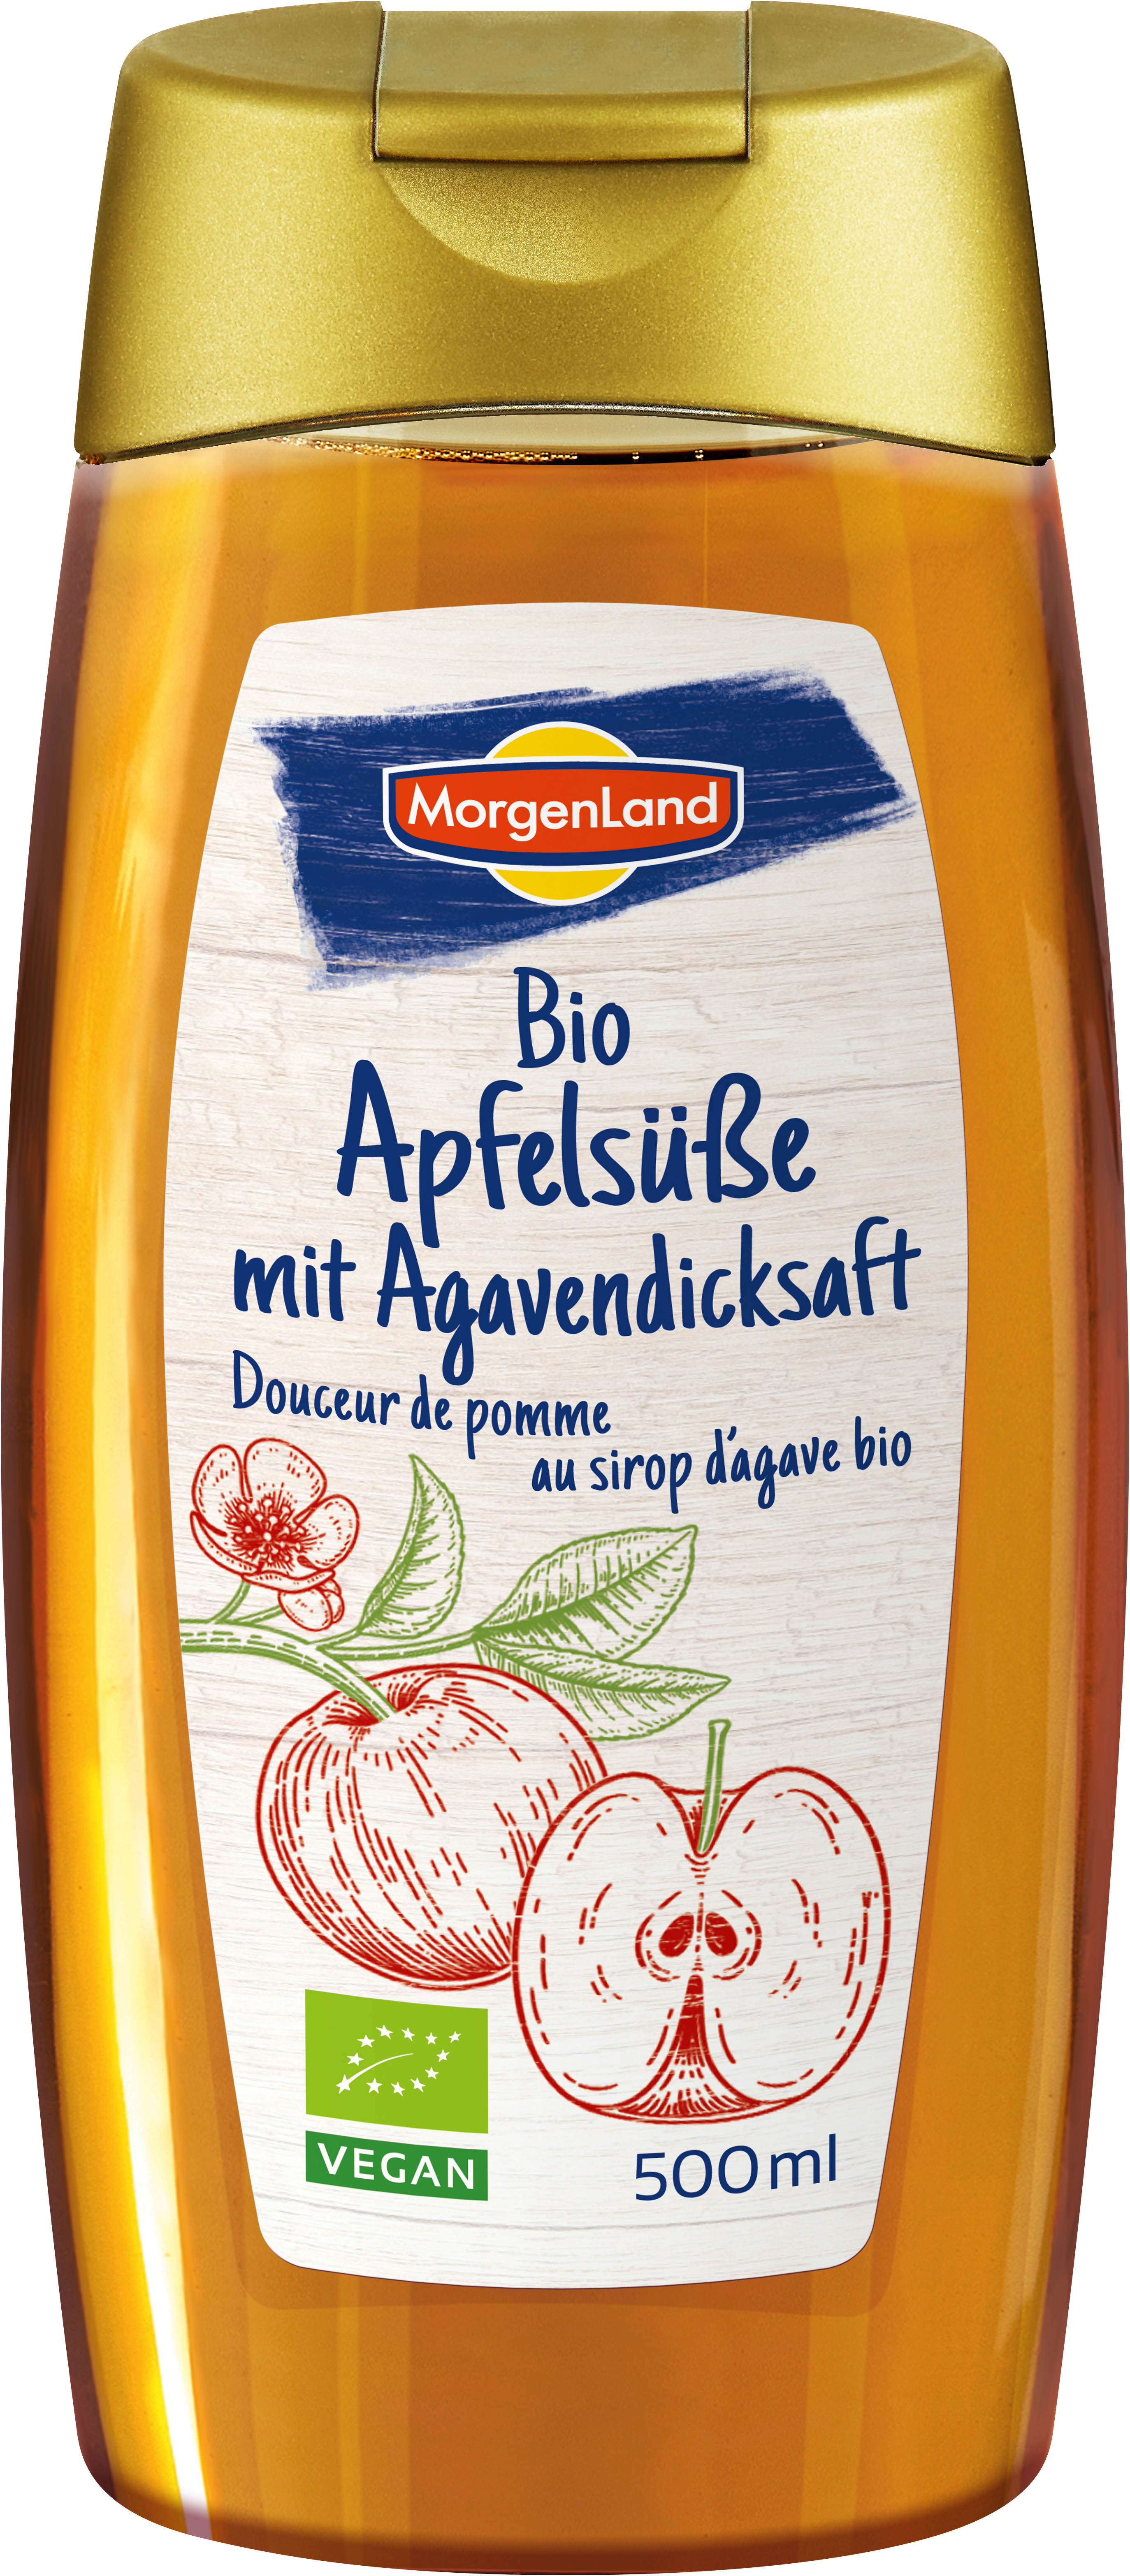 MorgenLand Apfelsüße 500ml/A